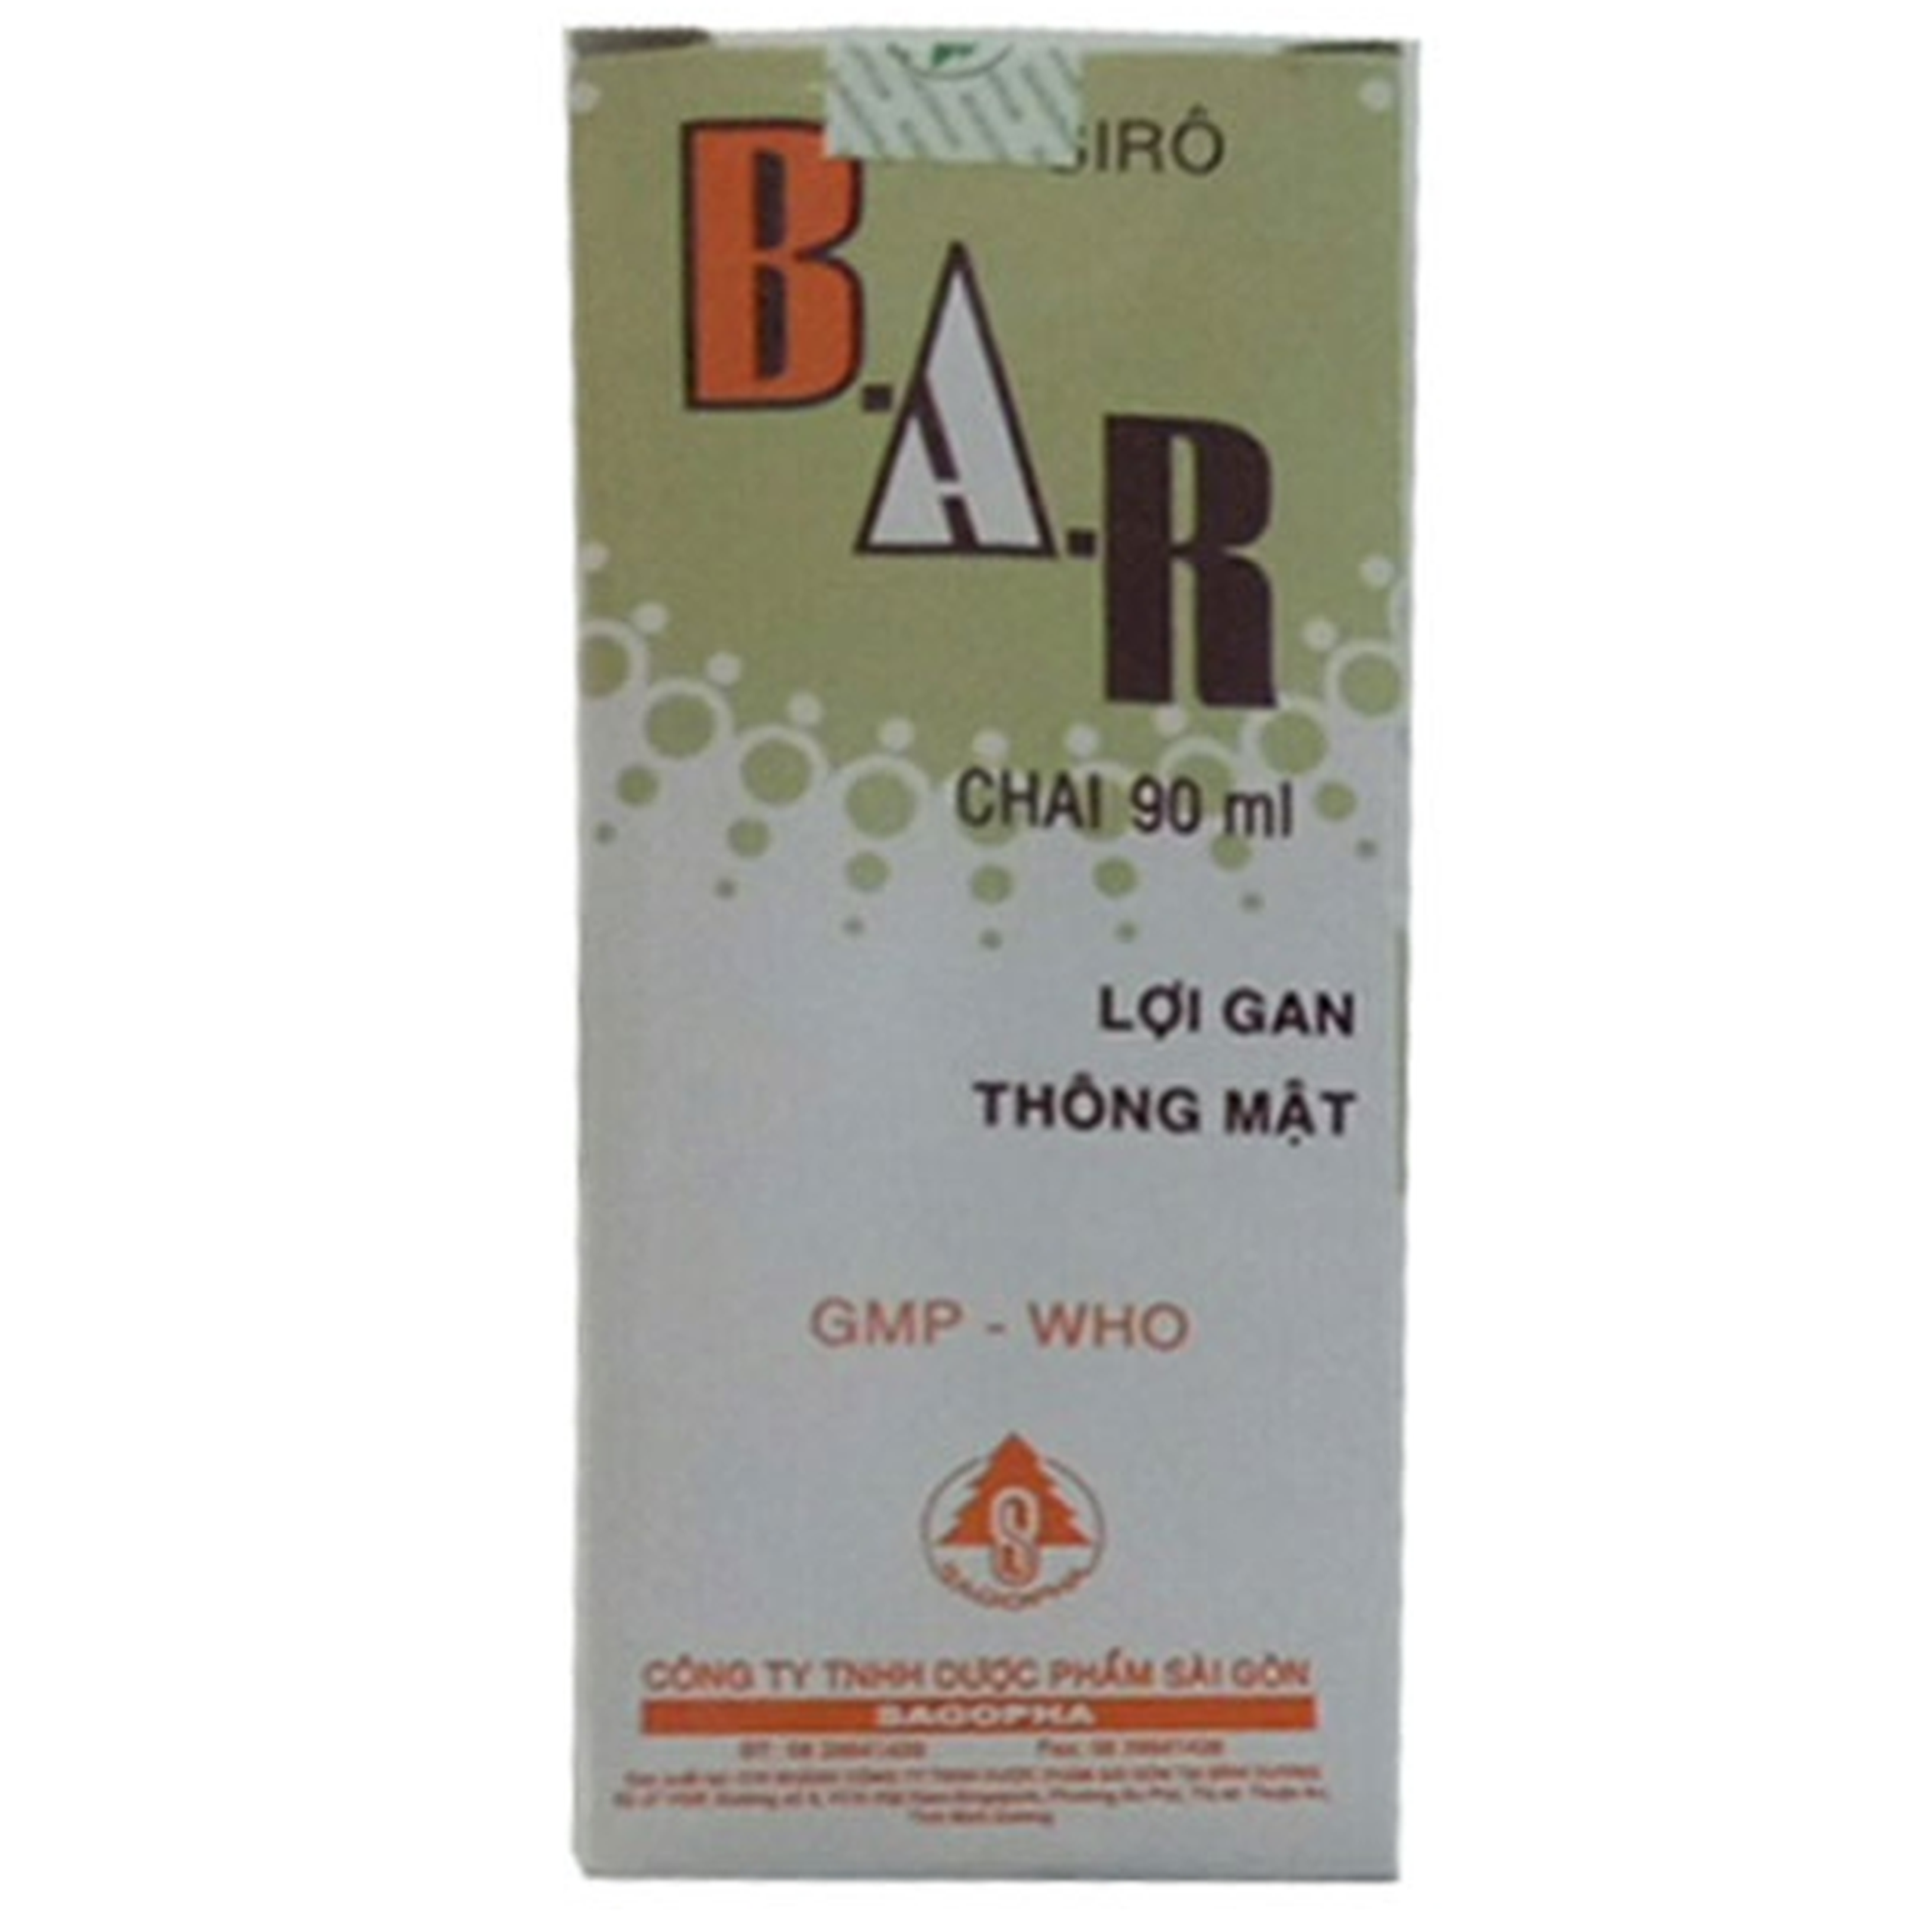 Siro Bar Sagopha lợi gan, thông mật (90ml)